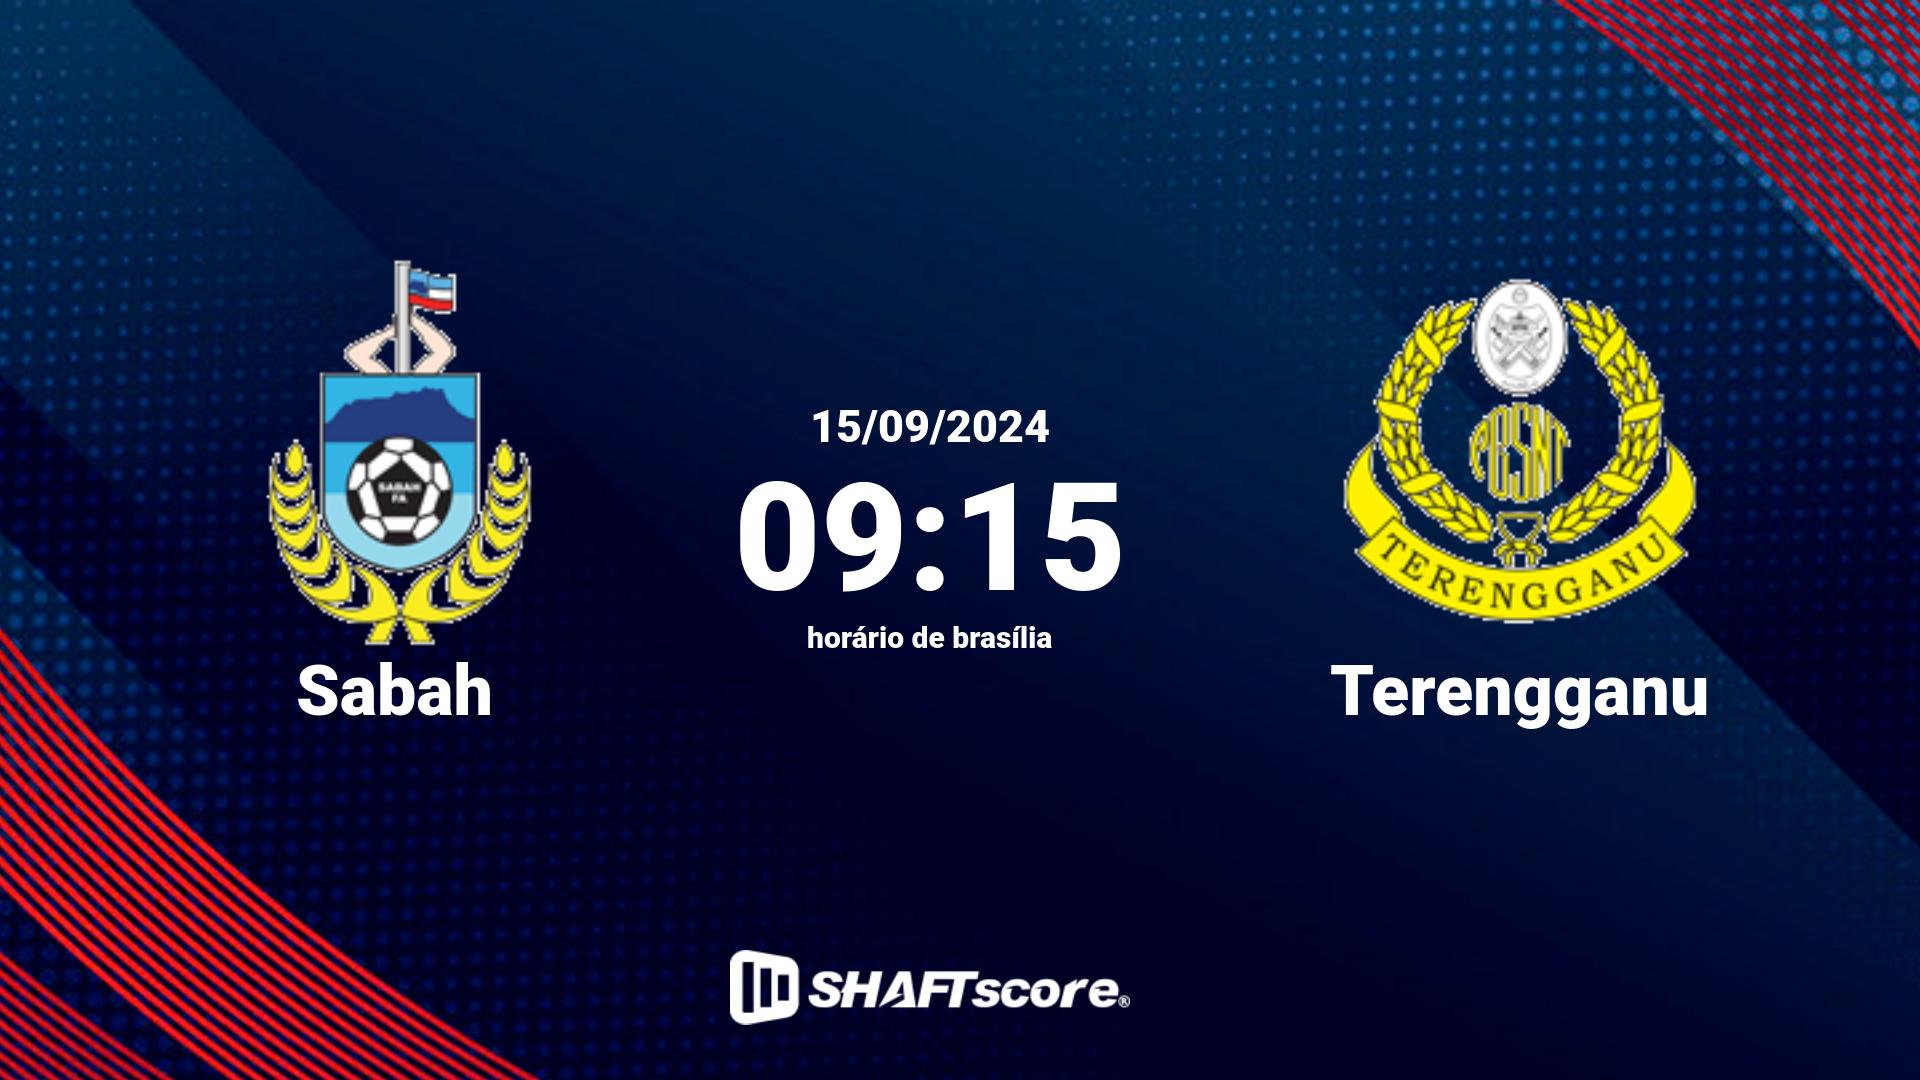 Estatísticas do jogo Sabah vs Terengganu 15.09 09:15